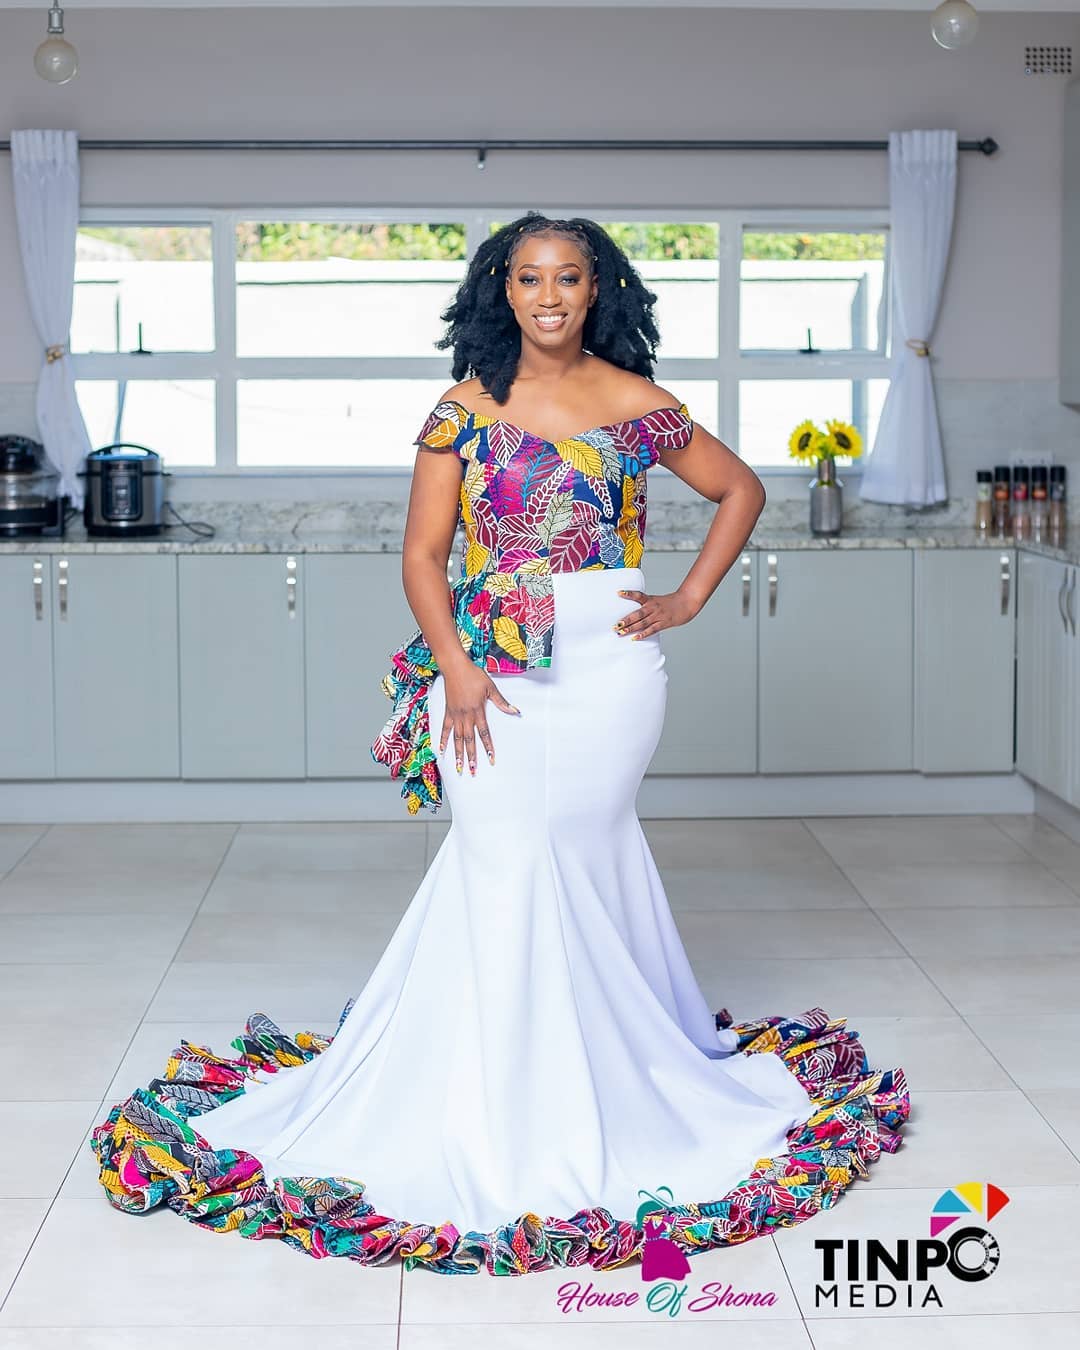 African traditional wedding attire 2021 for African women - wedding attire 7